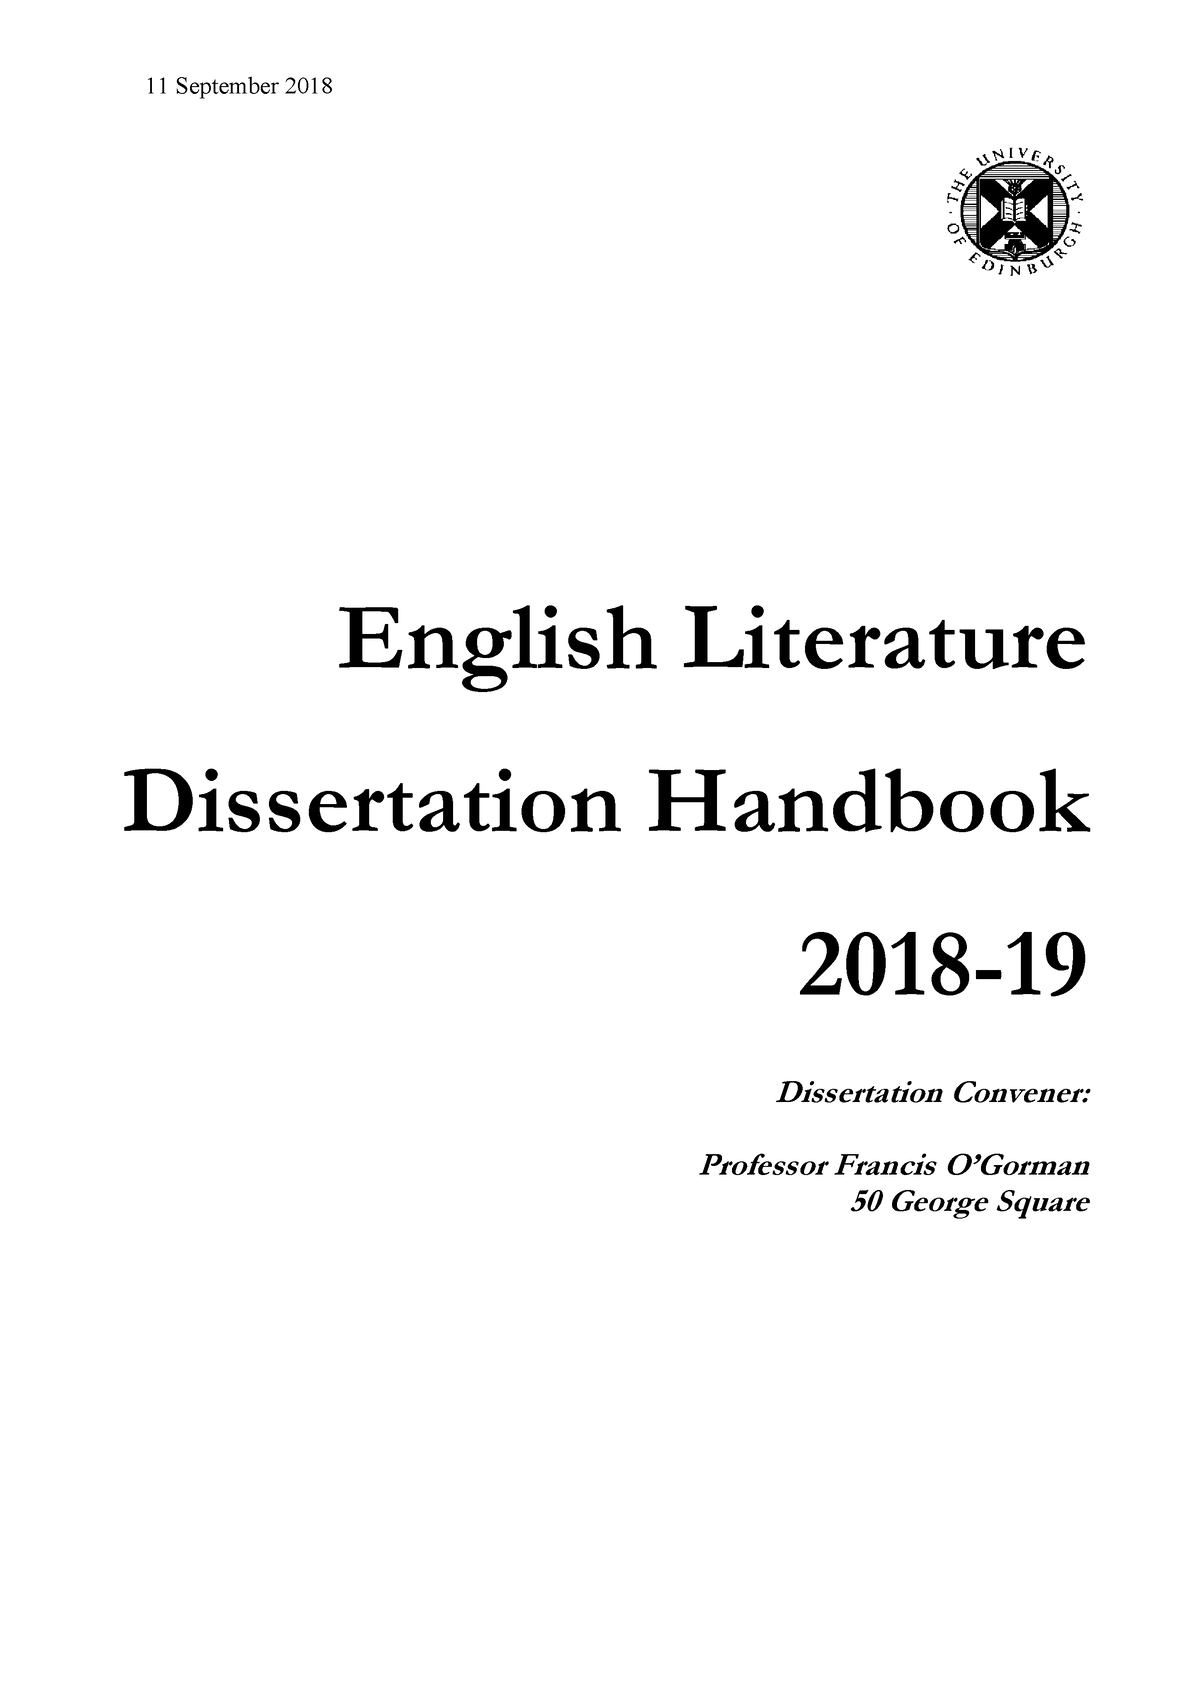 dissertation handbook ucl